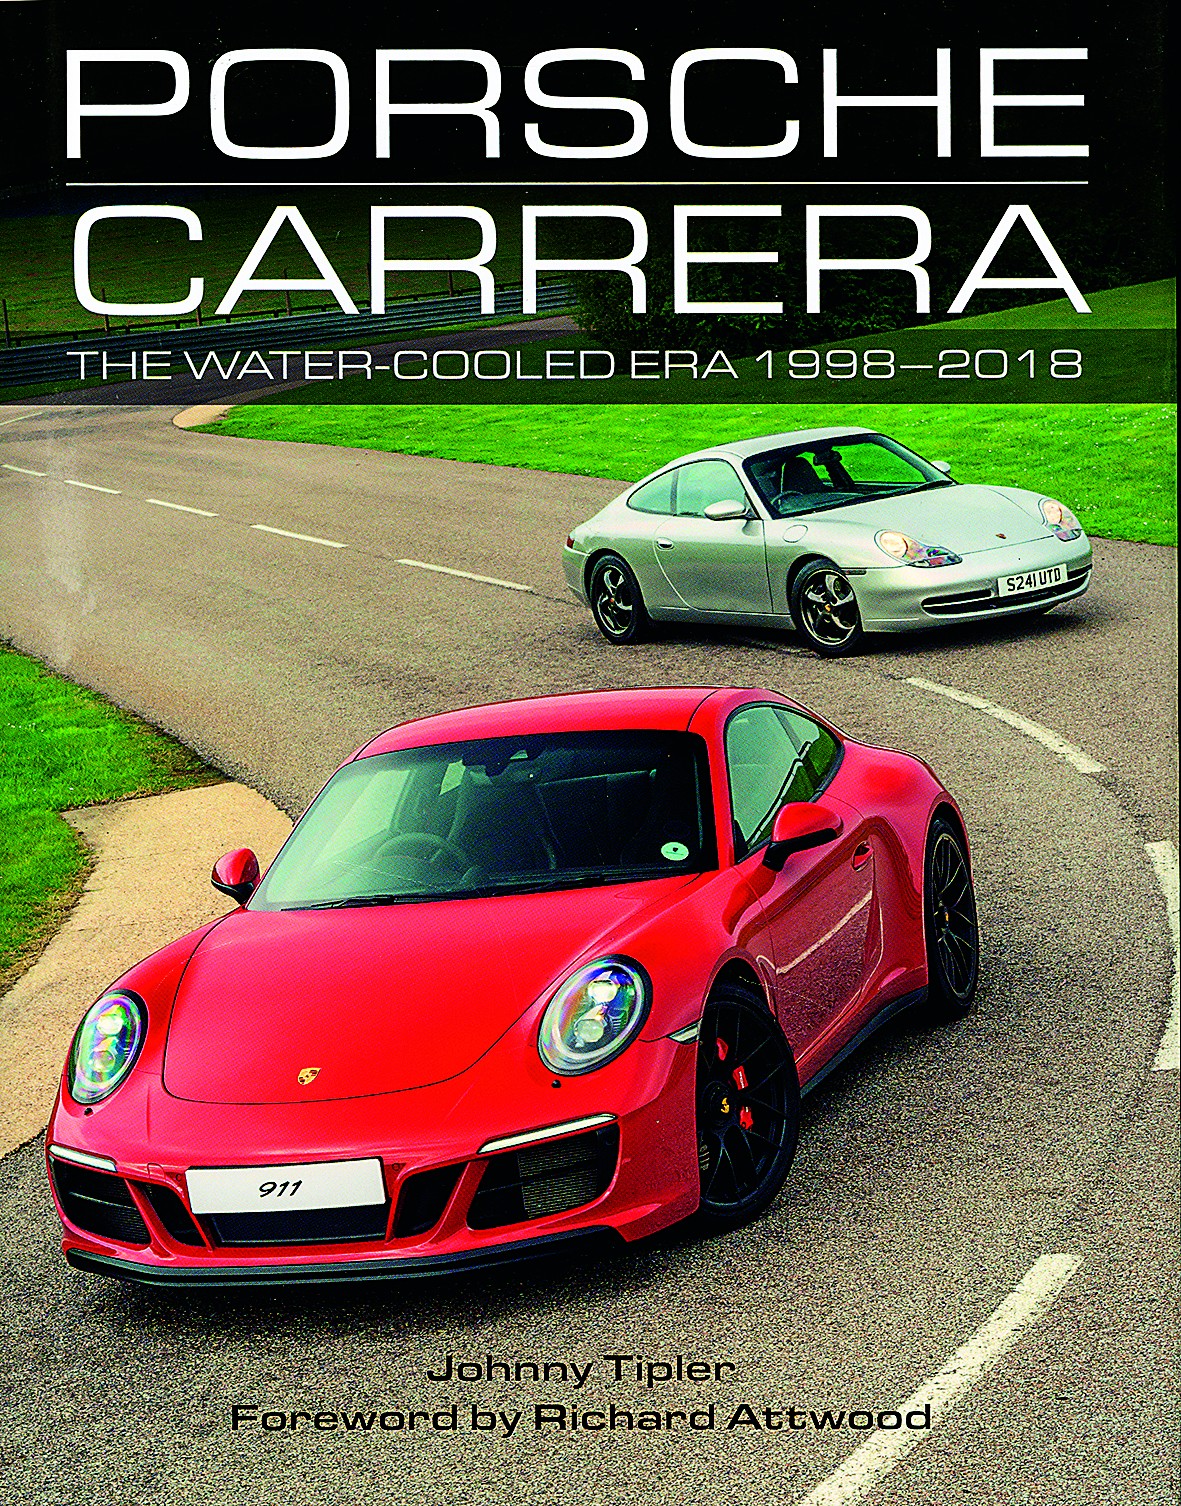 Porsche Carrera The Water-Cooled Era 1998-2018